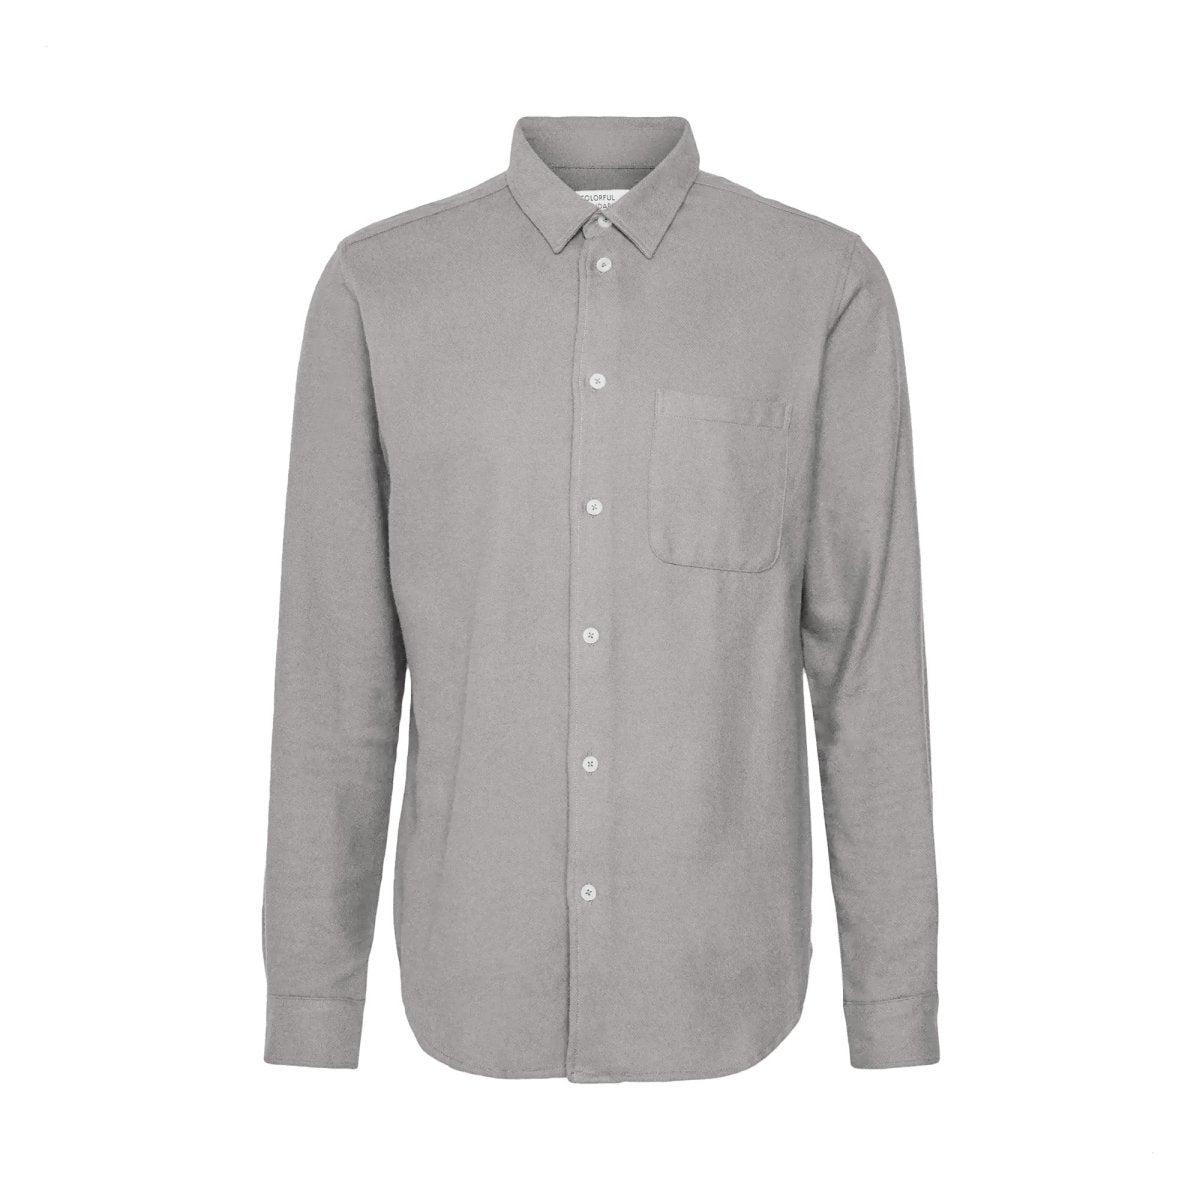 Colorful Flannel Shirt Limestone Grey - KYOTO - Colorful Standard